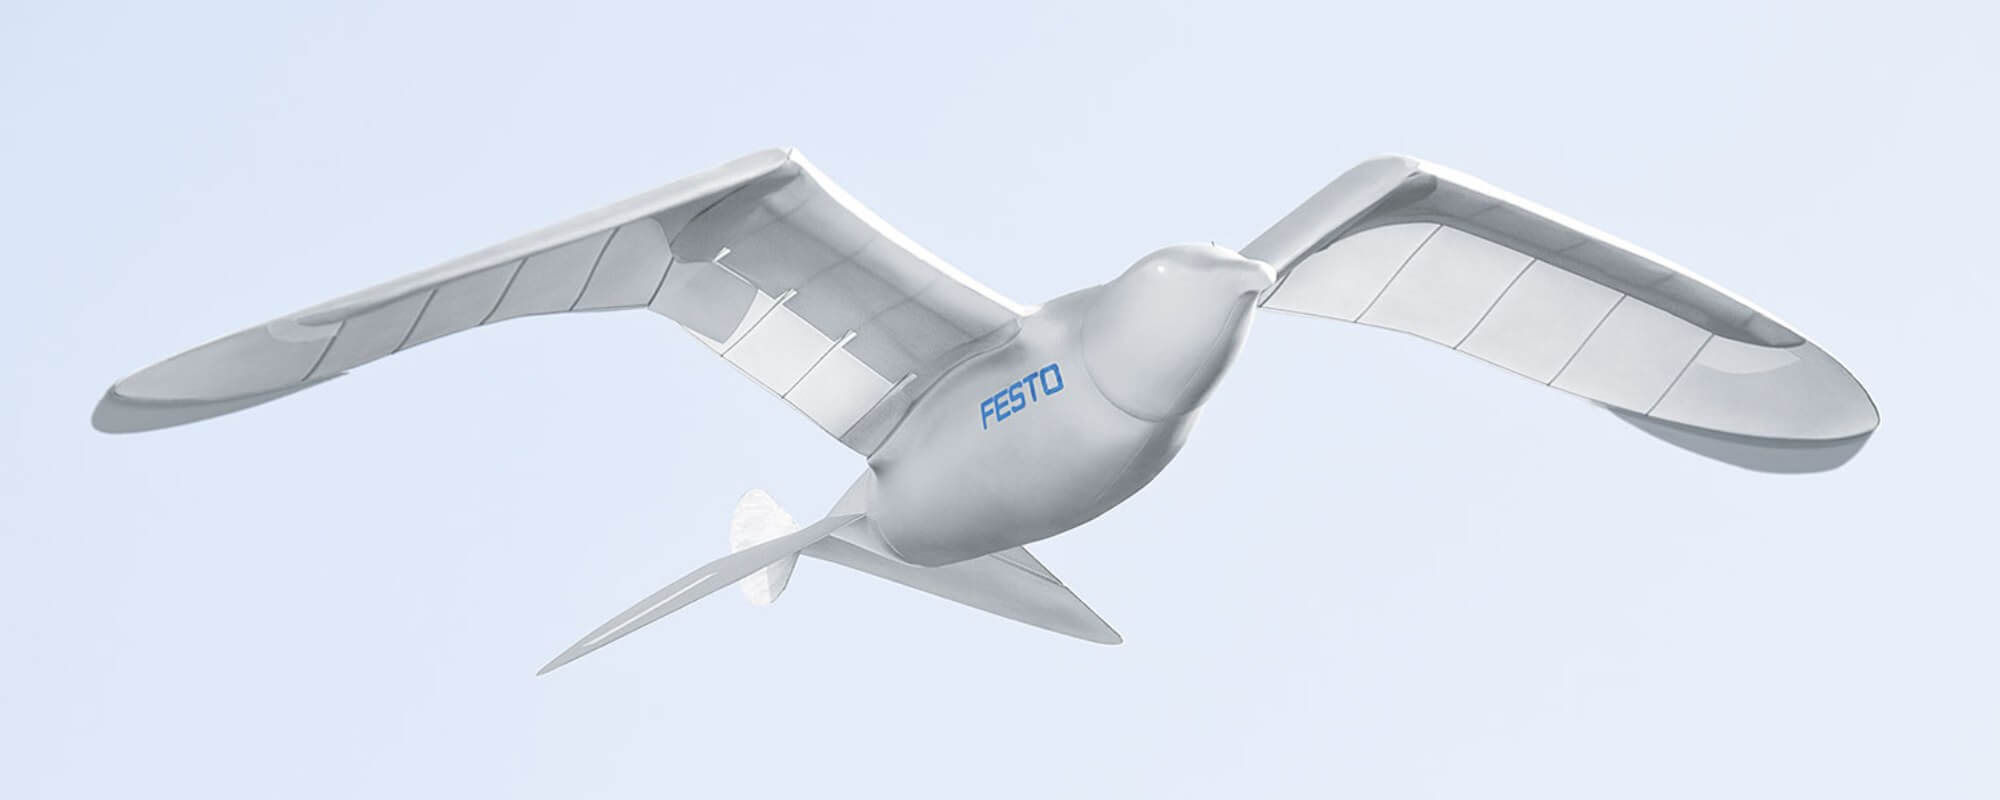 Drone That Crashed Inside Pakistan – Is It The Festo SmartBird?